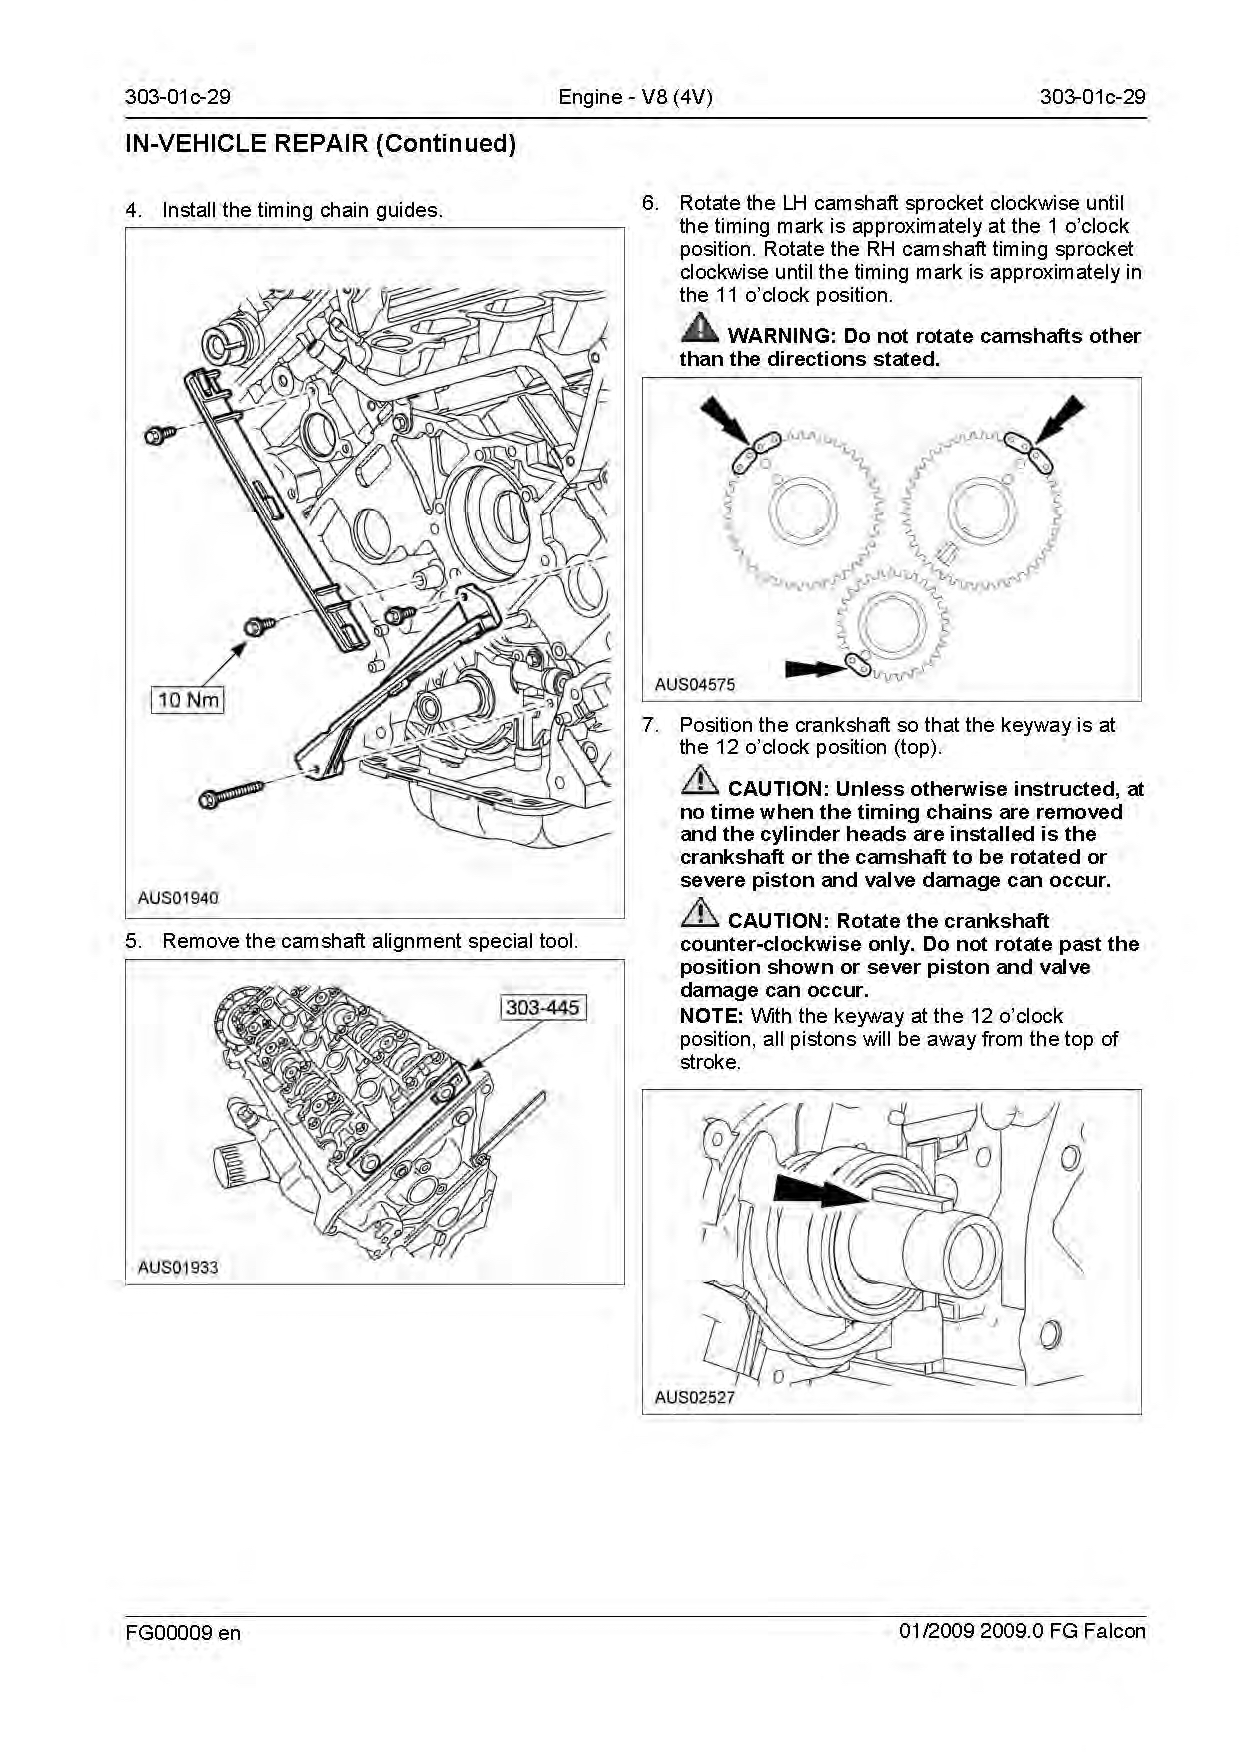 2014 Ford Falcon Repair Manual Engine V8